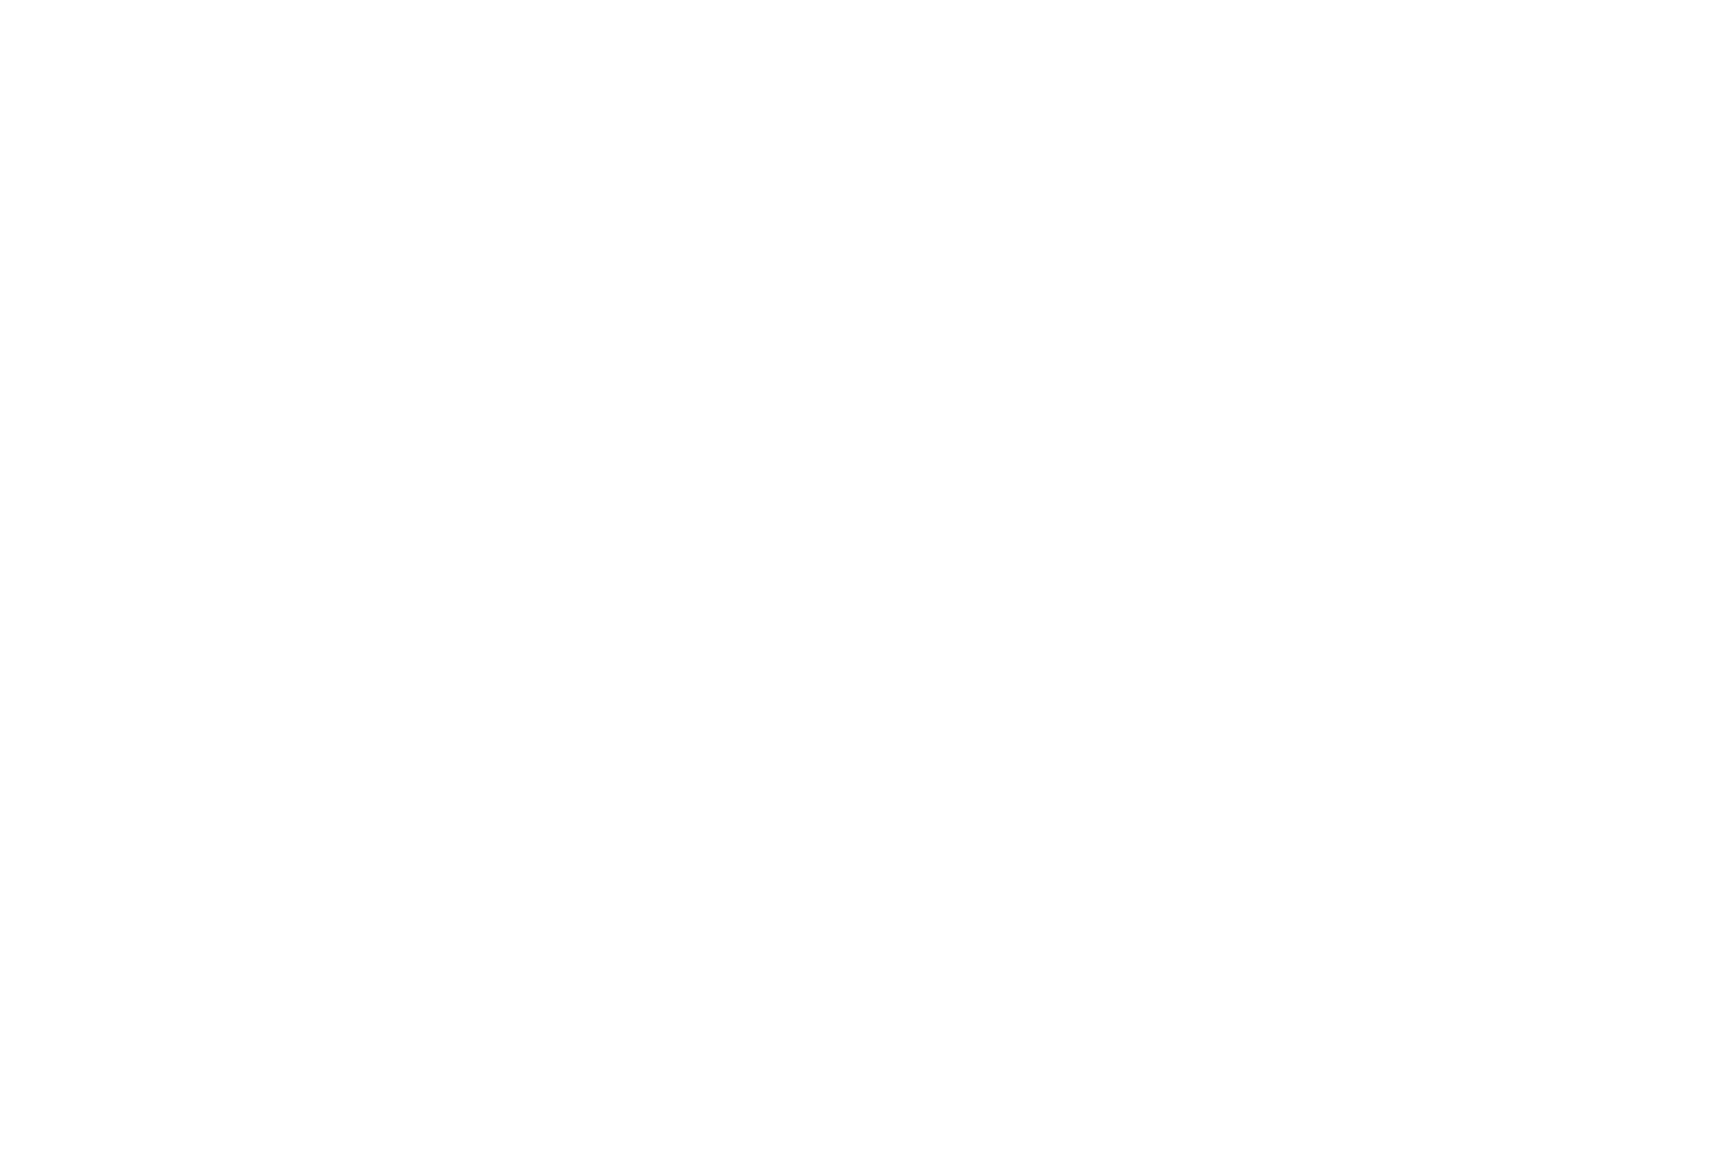 OFFICIAL SELECTION - Milan Gold Awards - 2023